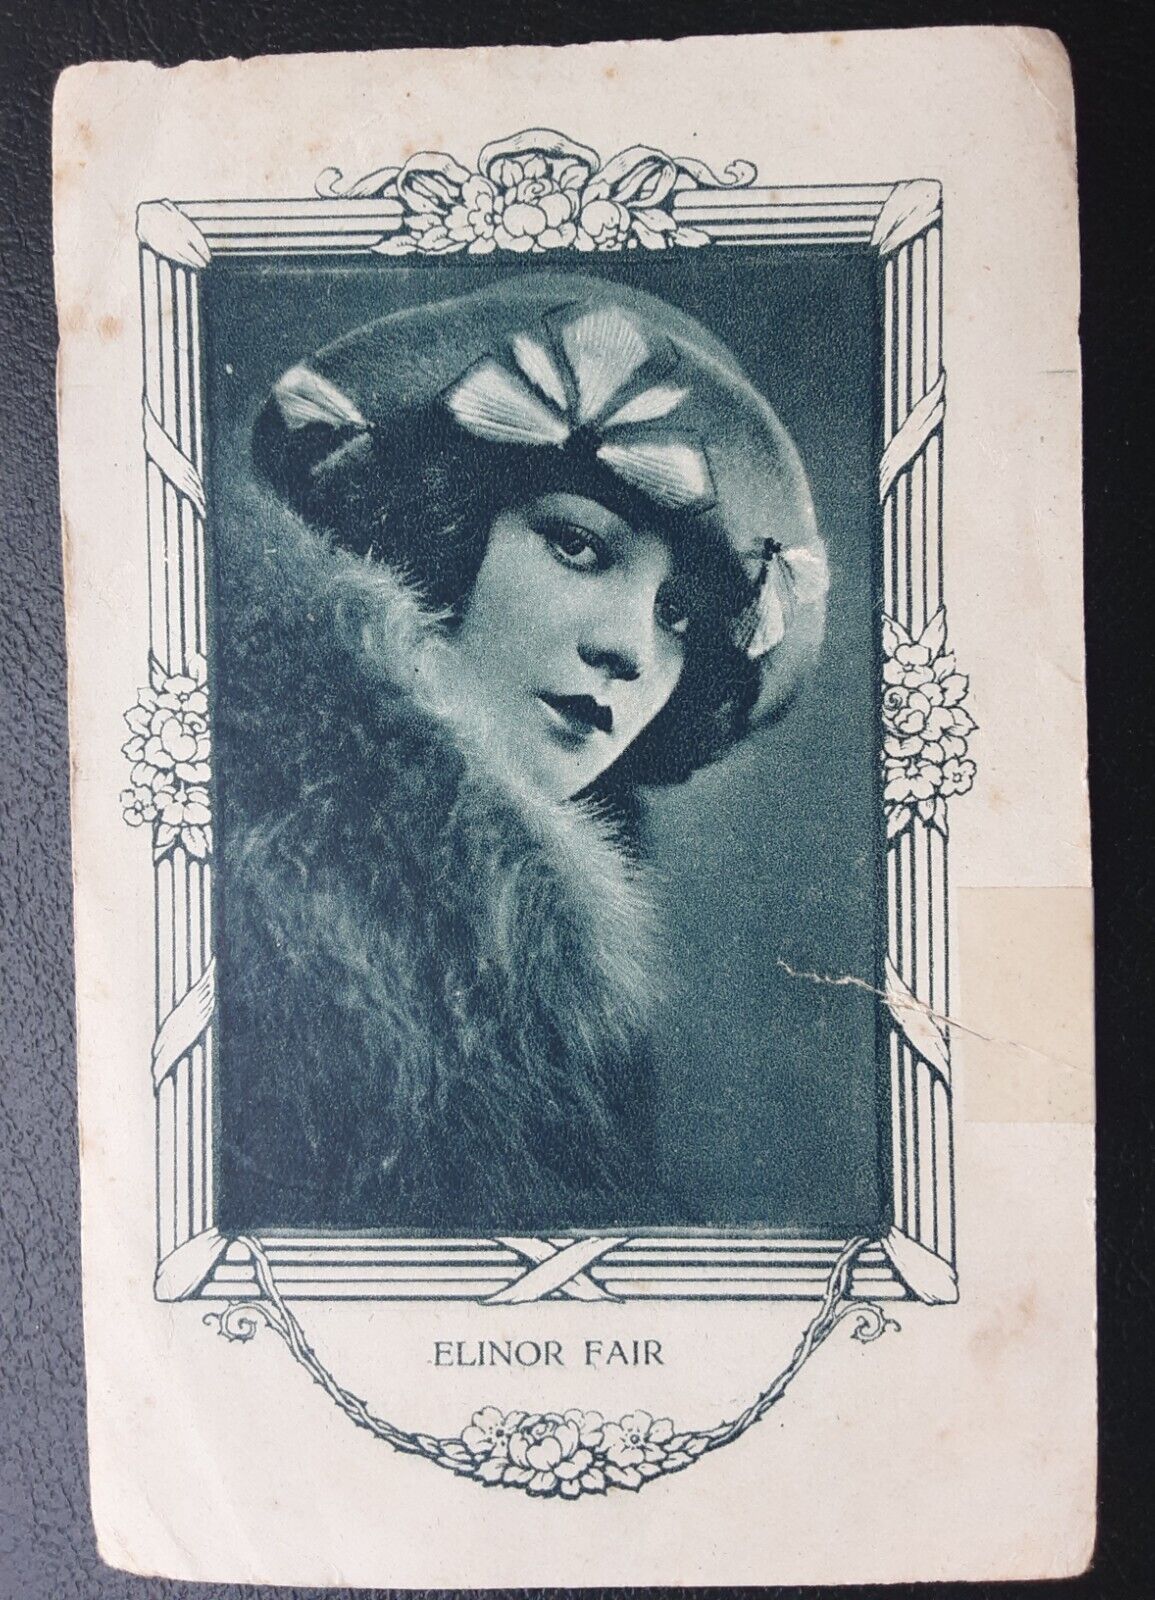 1930 ELINOR FAIR,  SPANISH CHOCOLATE CARD, ARTISTAS DE CINE SERIES